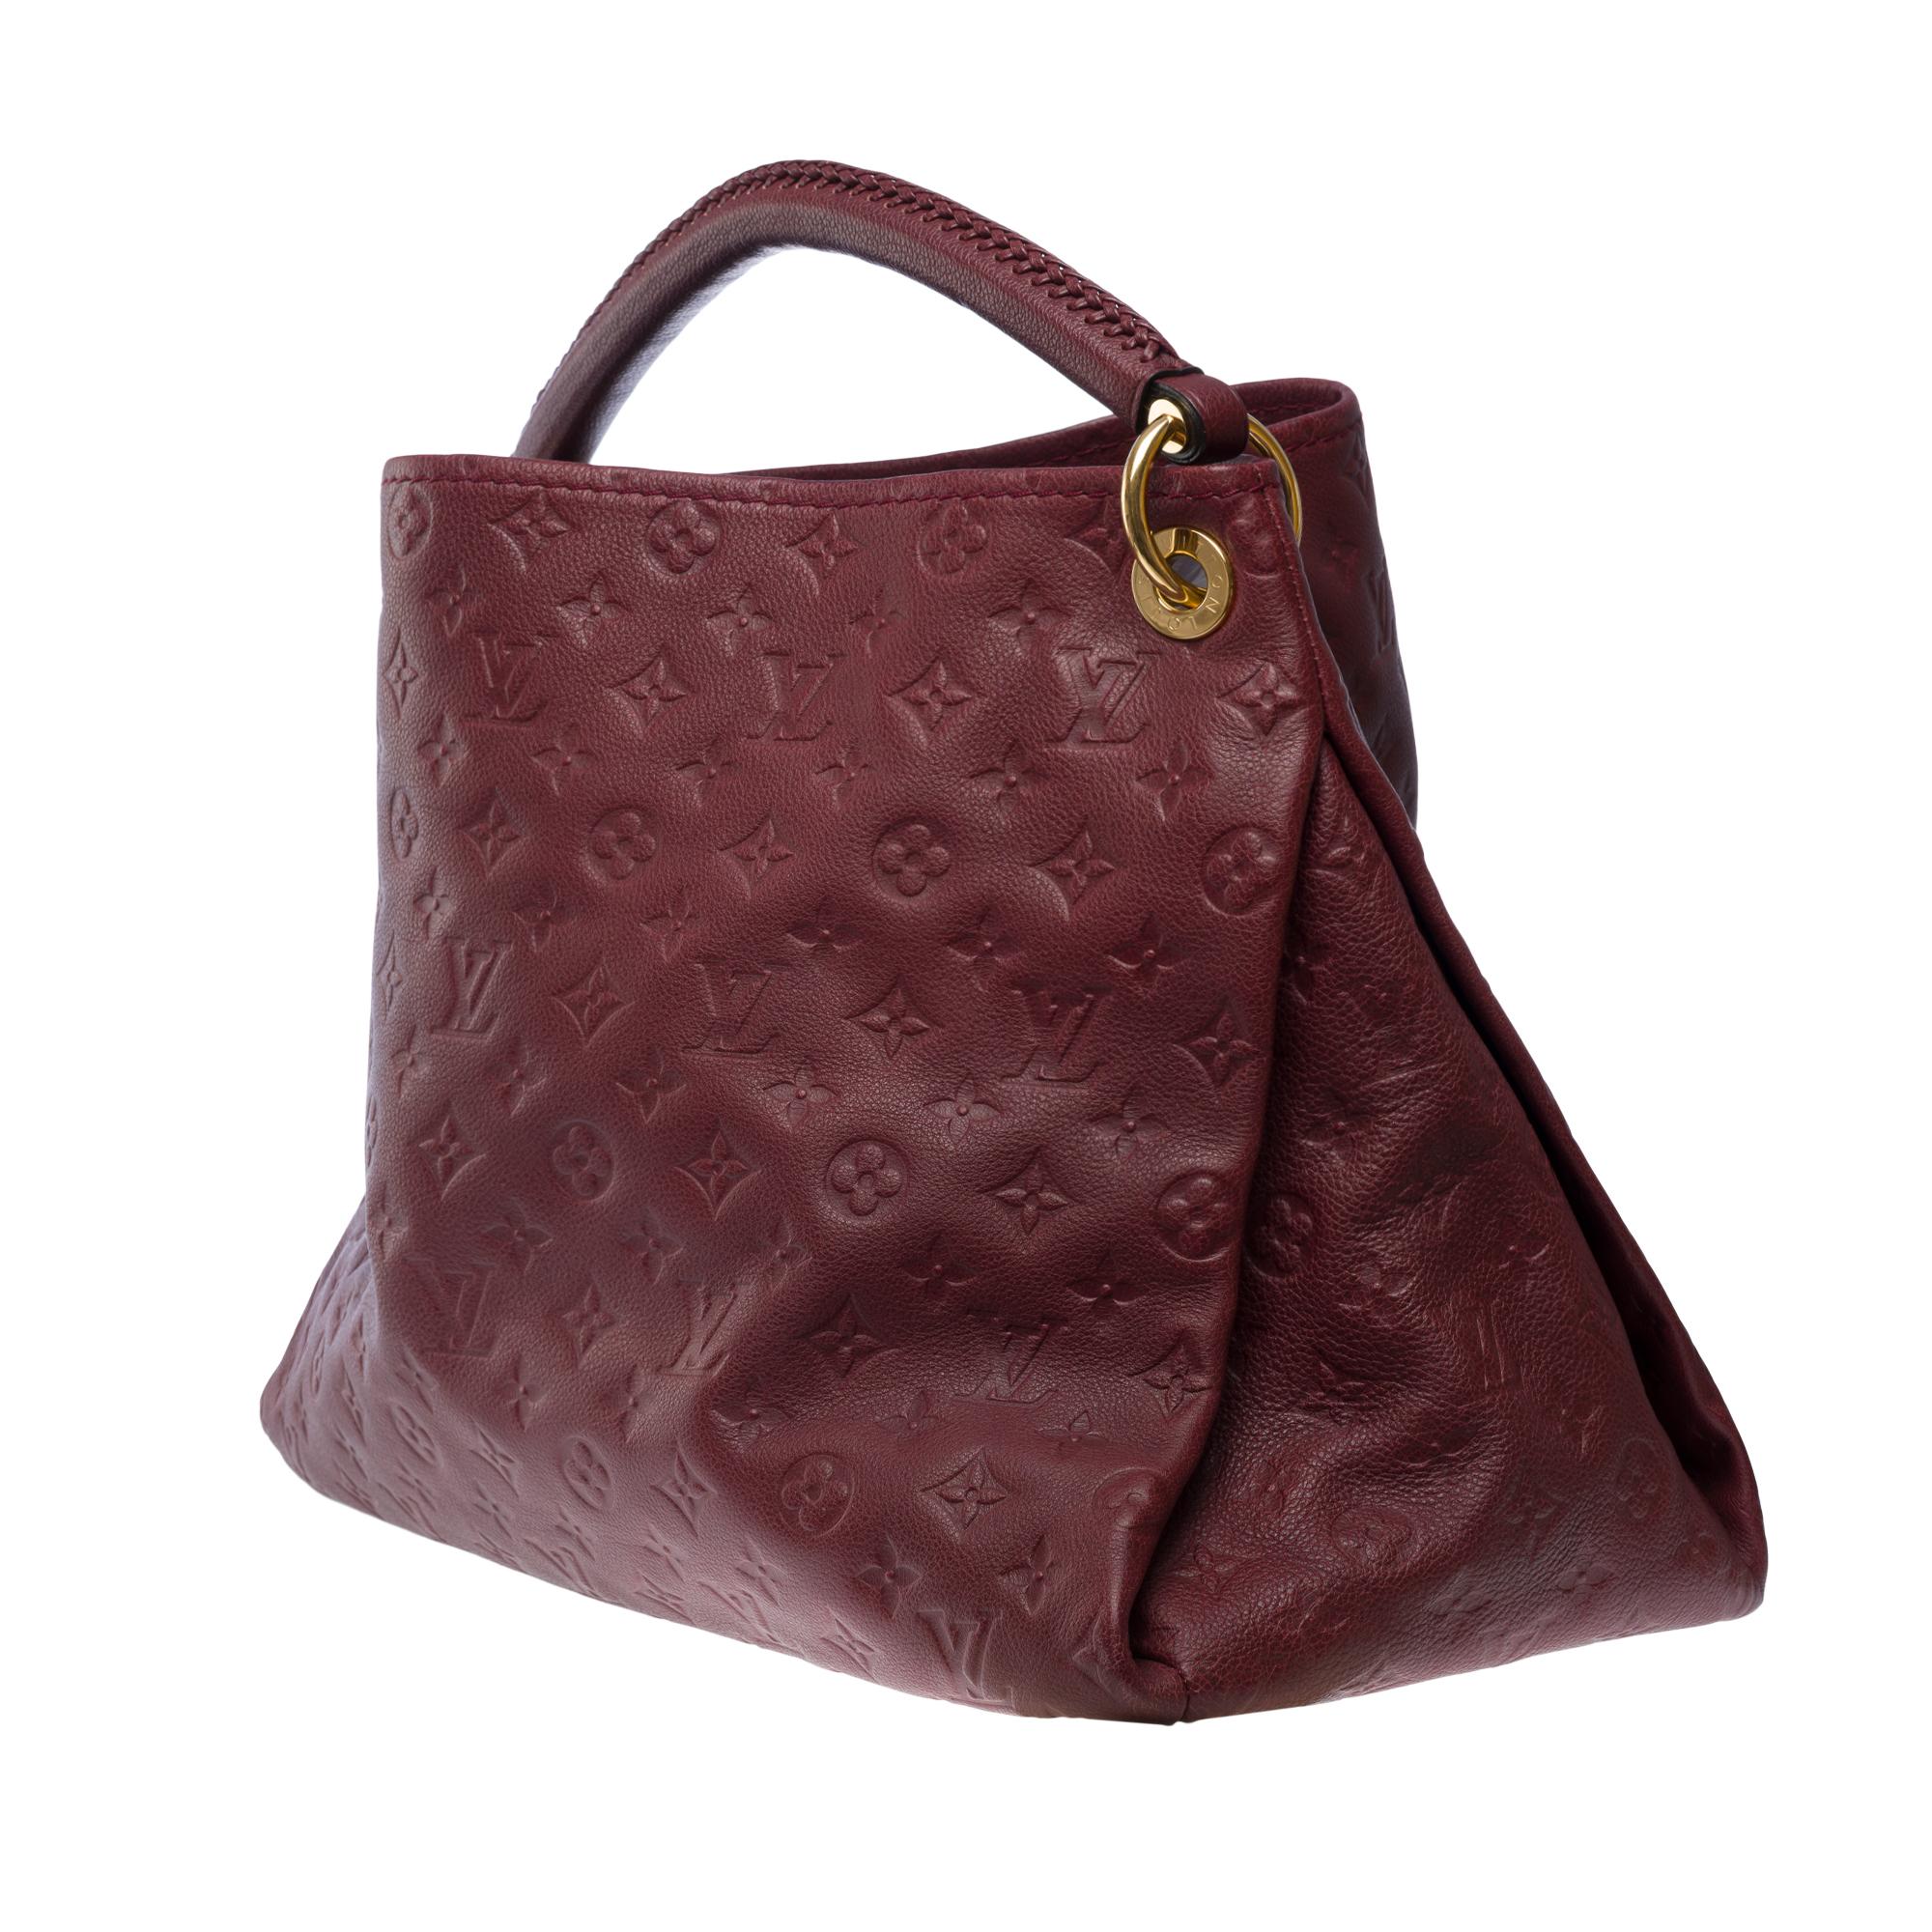 Women's Louis Vuitton Artsy MM Hobo bag in Burgundy Monogram calfskin leather, GHW For Sale